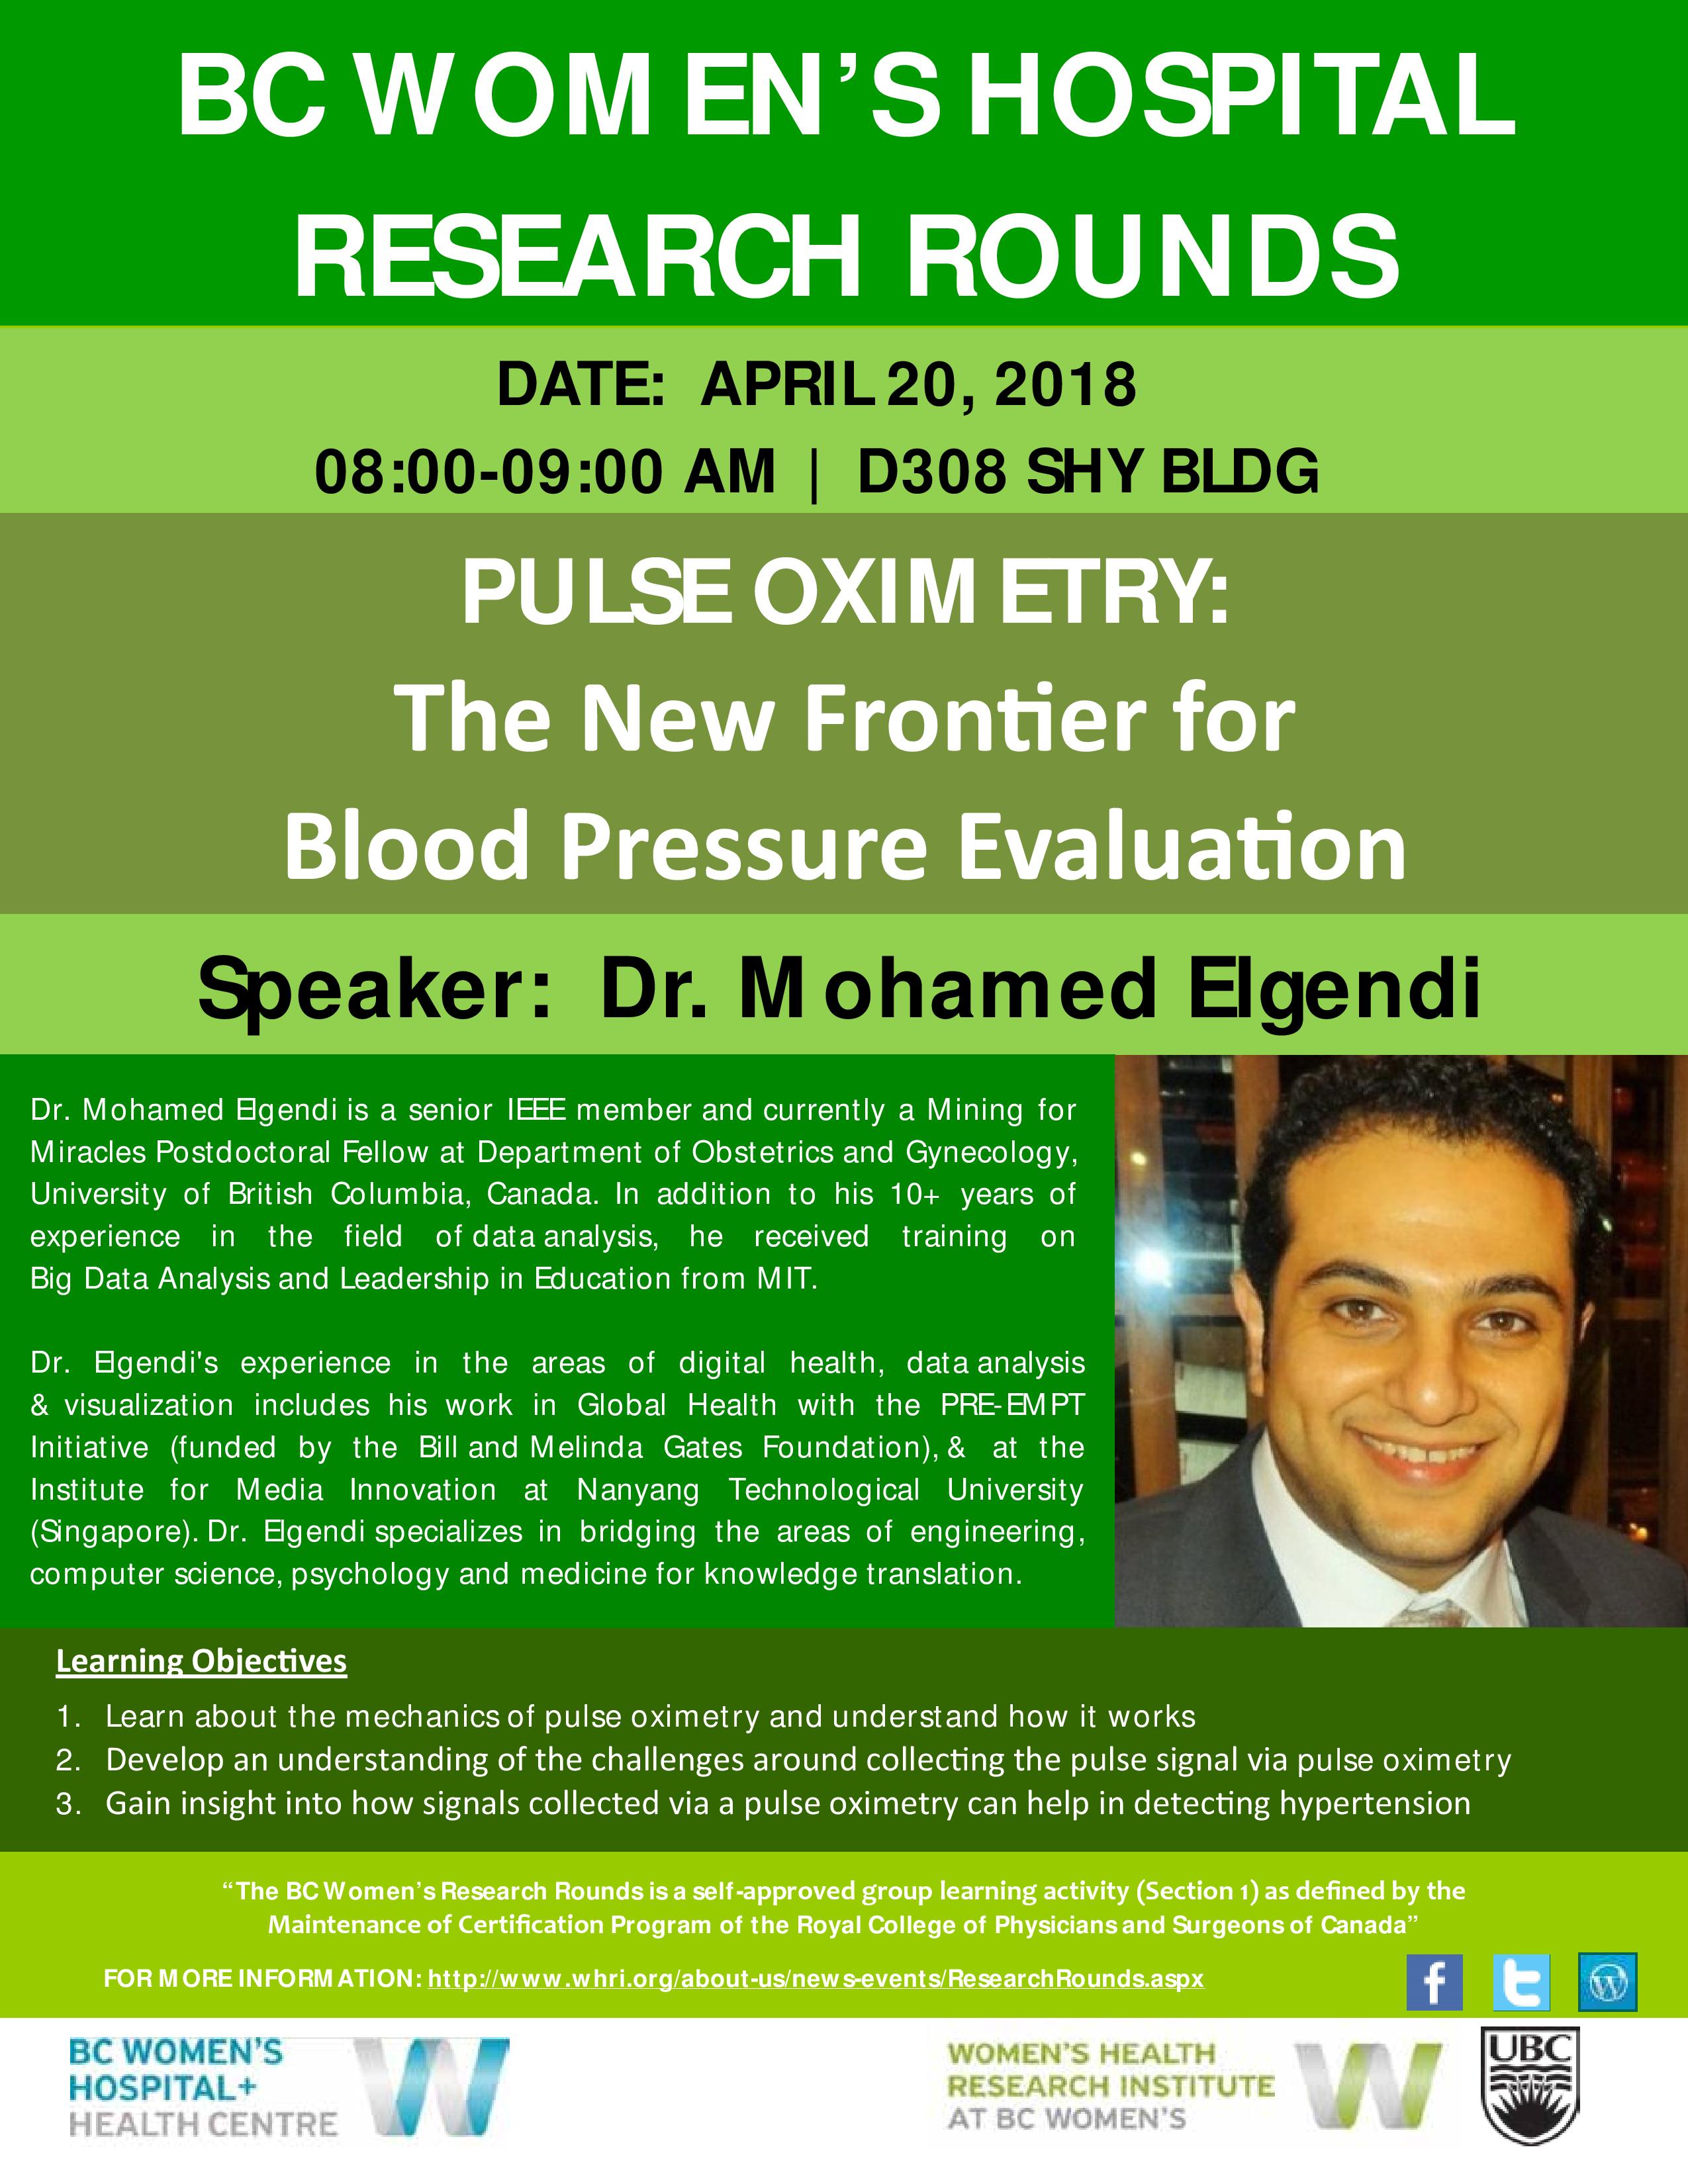 April 20 Rounds Poster featuring Dr. Mohamed Elgendi